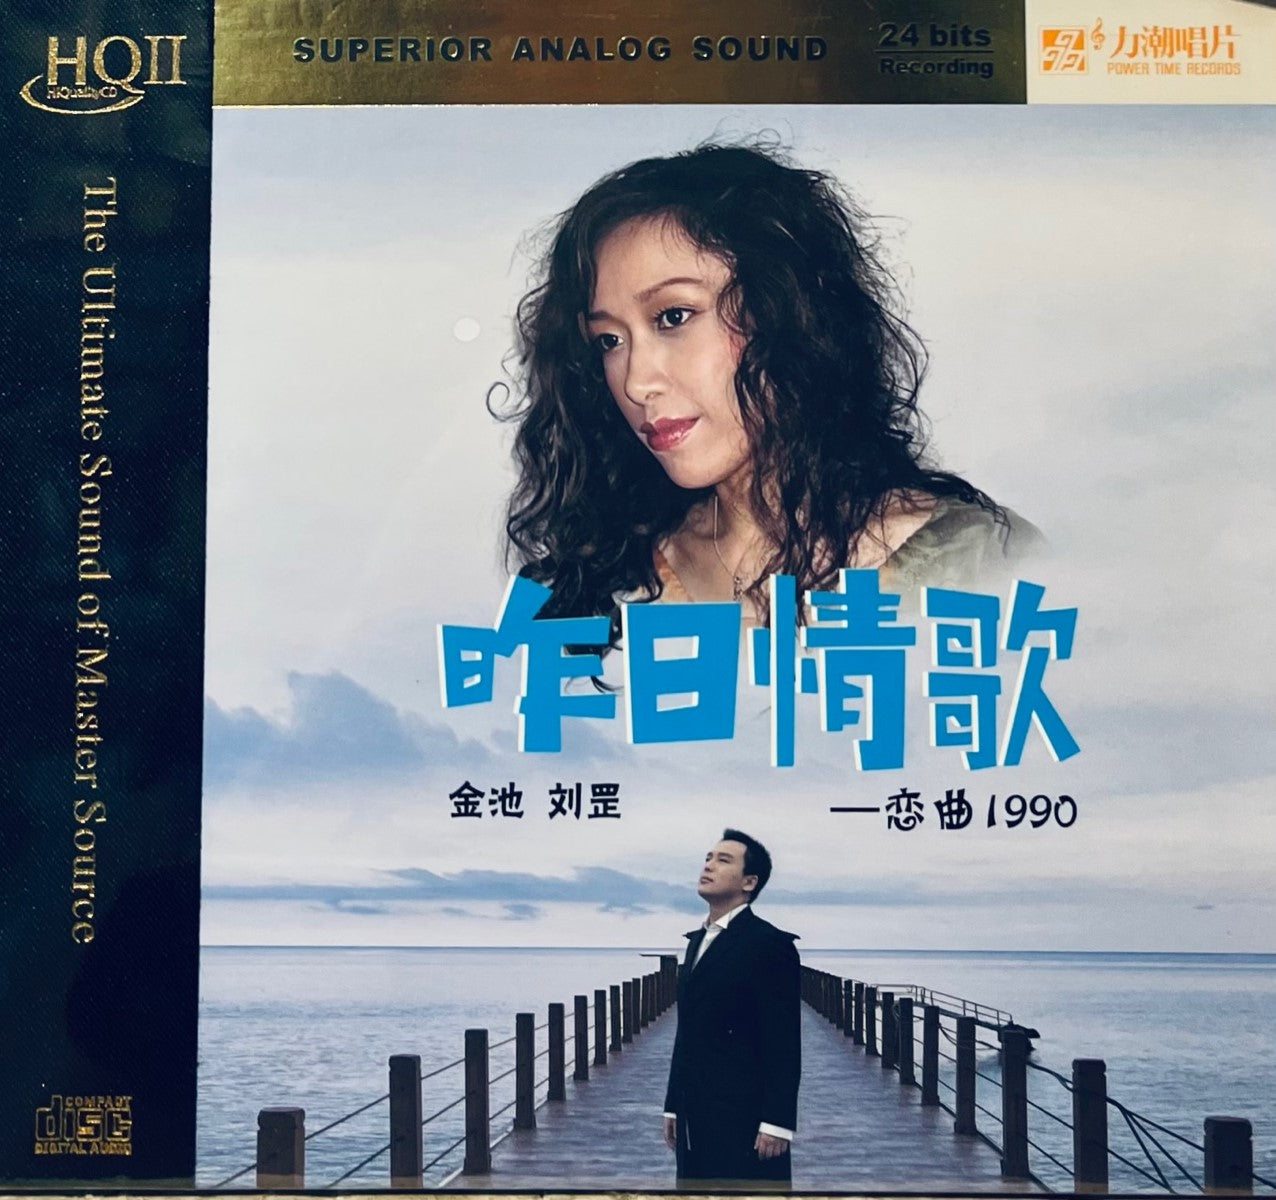 JIN CHI - 金池, 劉罡 昨日情歌 戀曲1 990 (HQII) CD